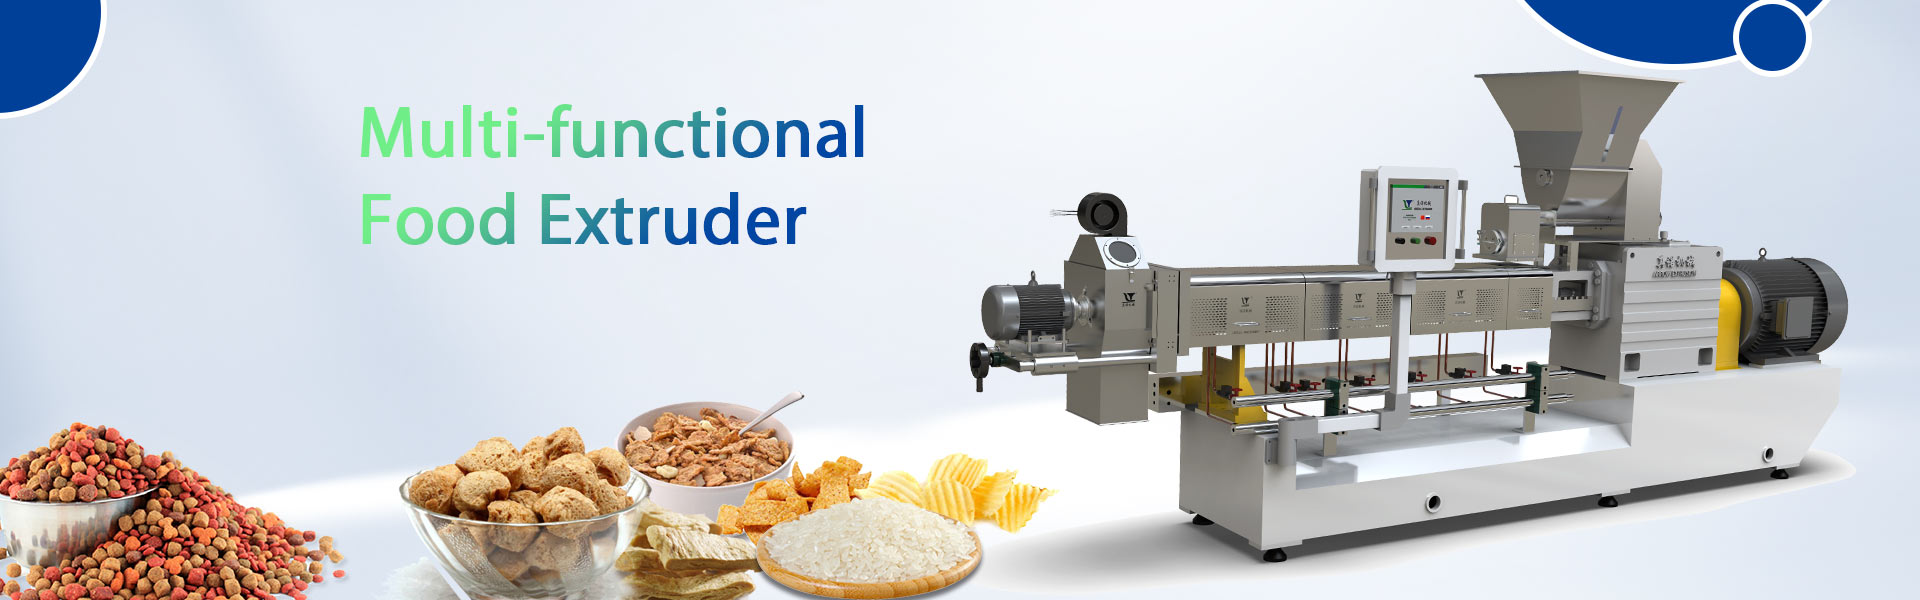 Multi-functional-Food-Extruder